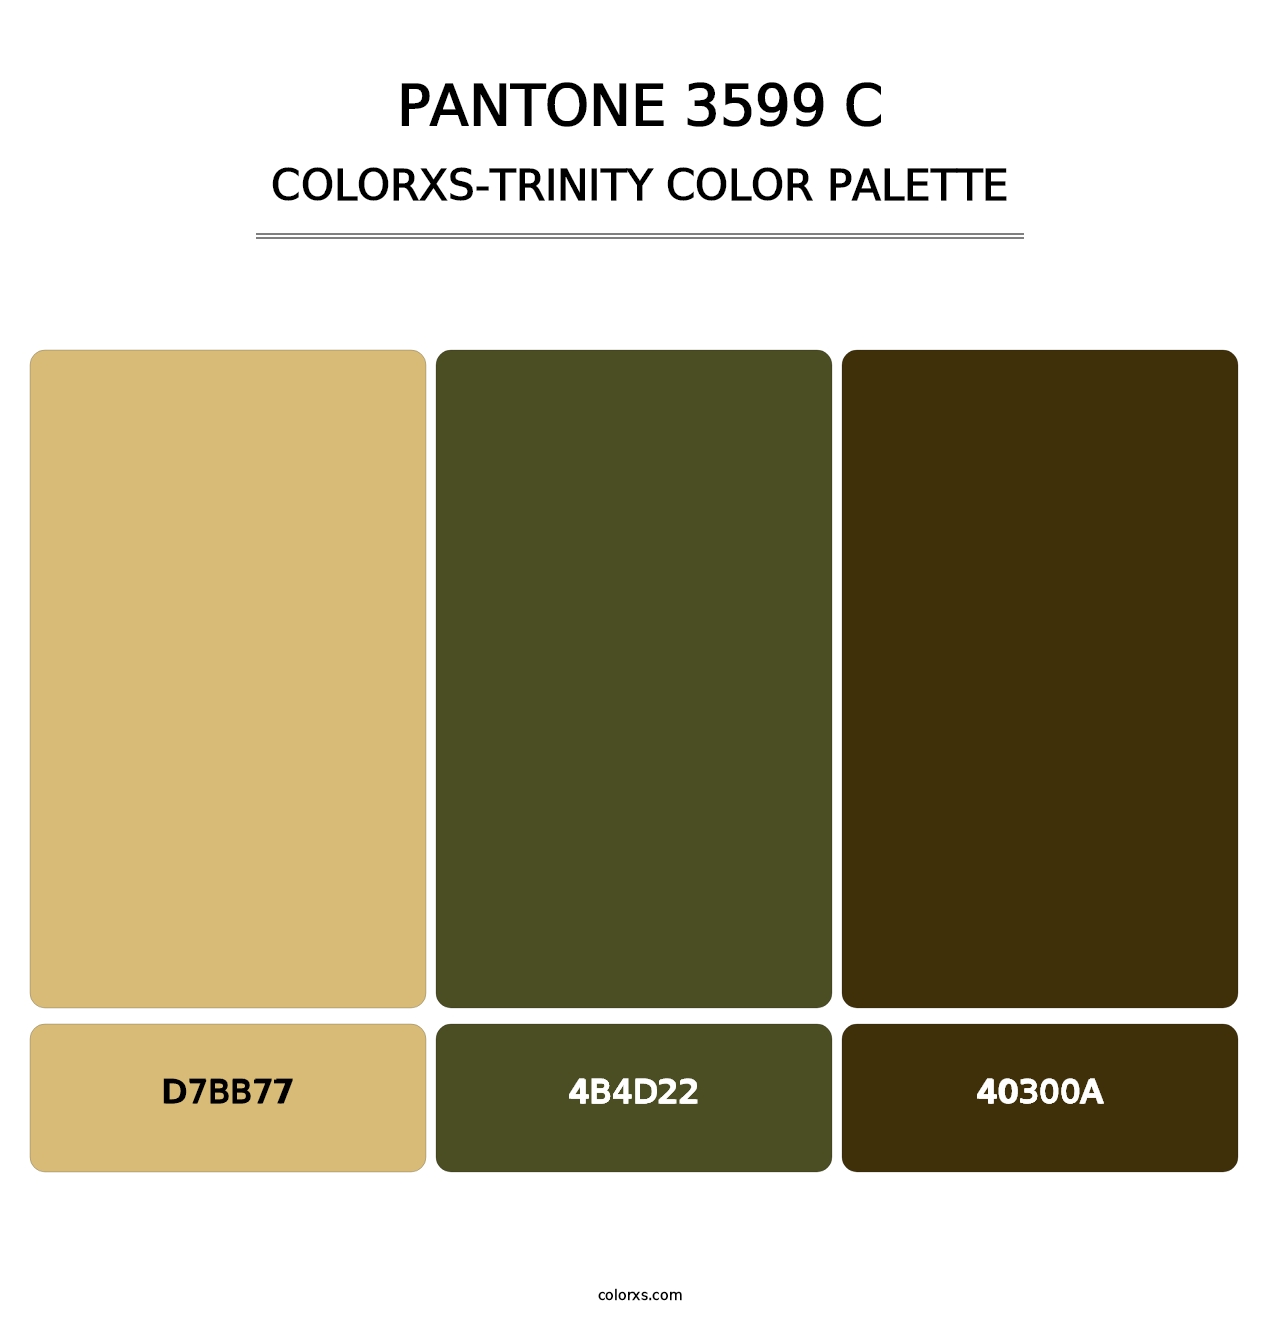 PANTONE 3599 C - Colorxs Trinity Palette